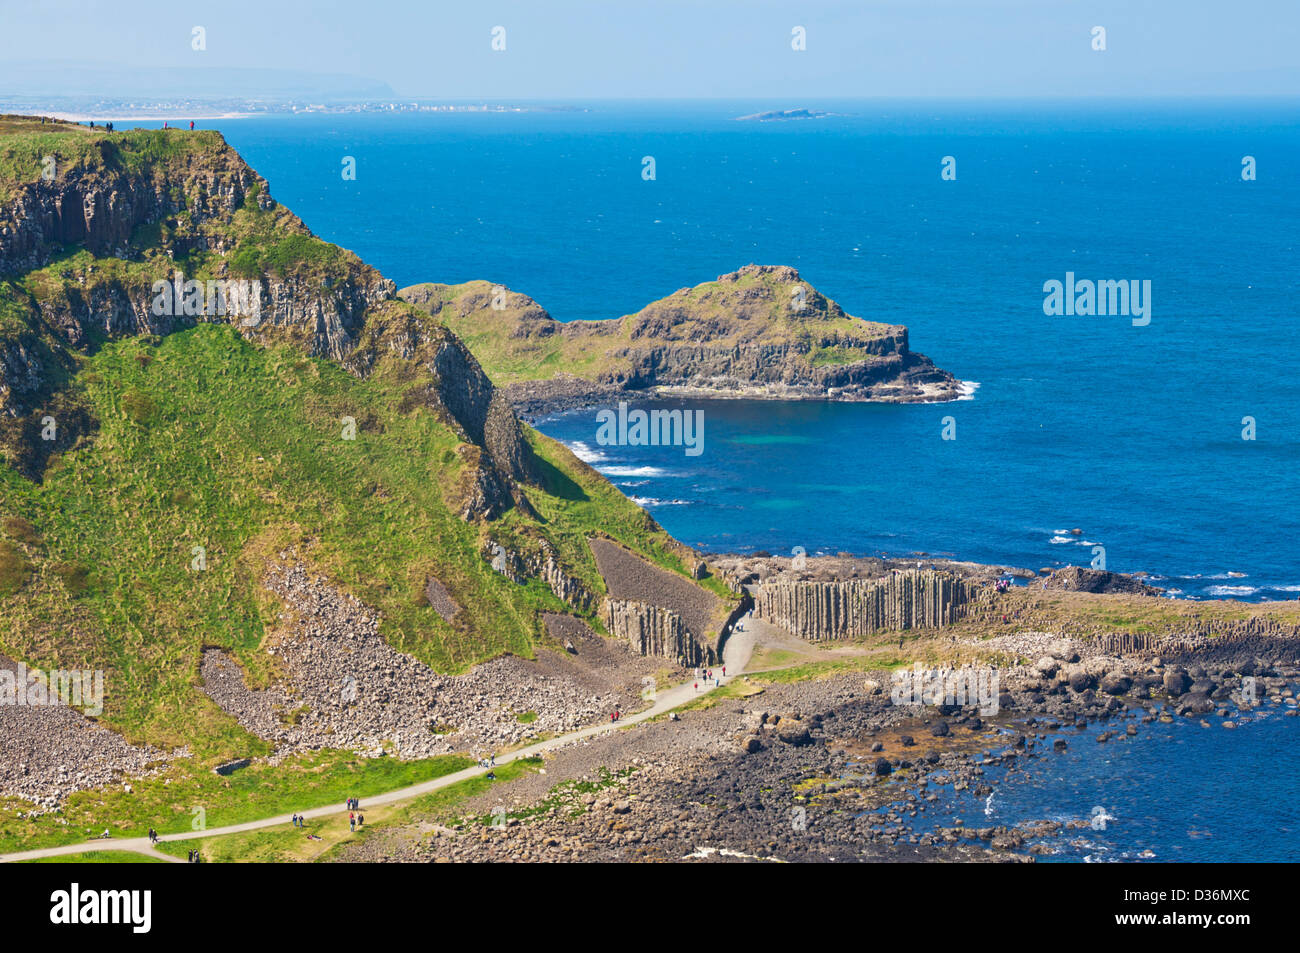 Giants Causeway north Antrim coastal path County Antrim Northern Ireland GB UK EU Europe Stock Photo